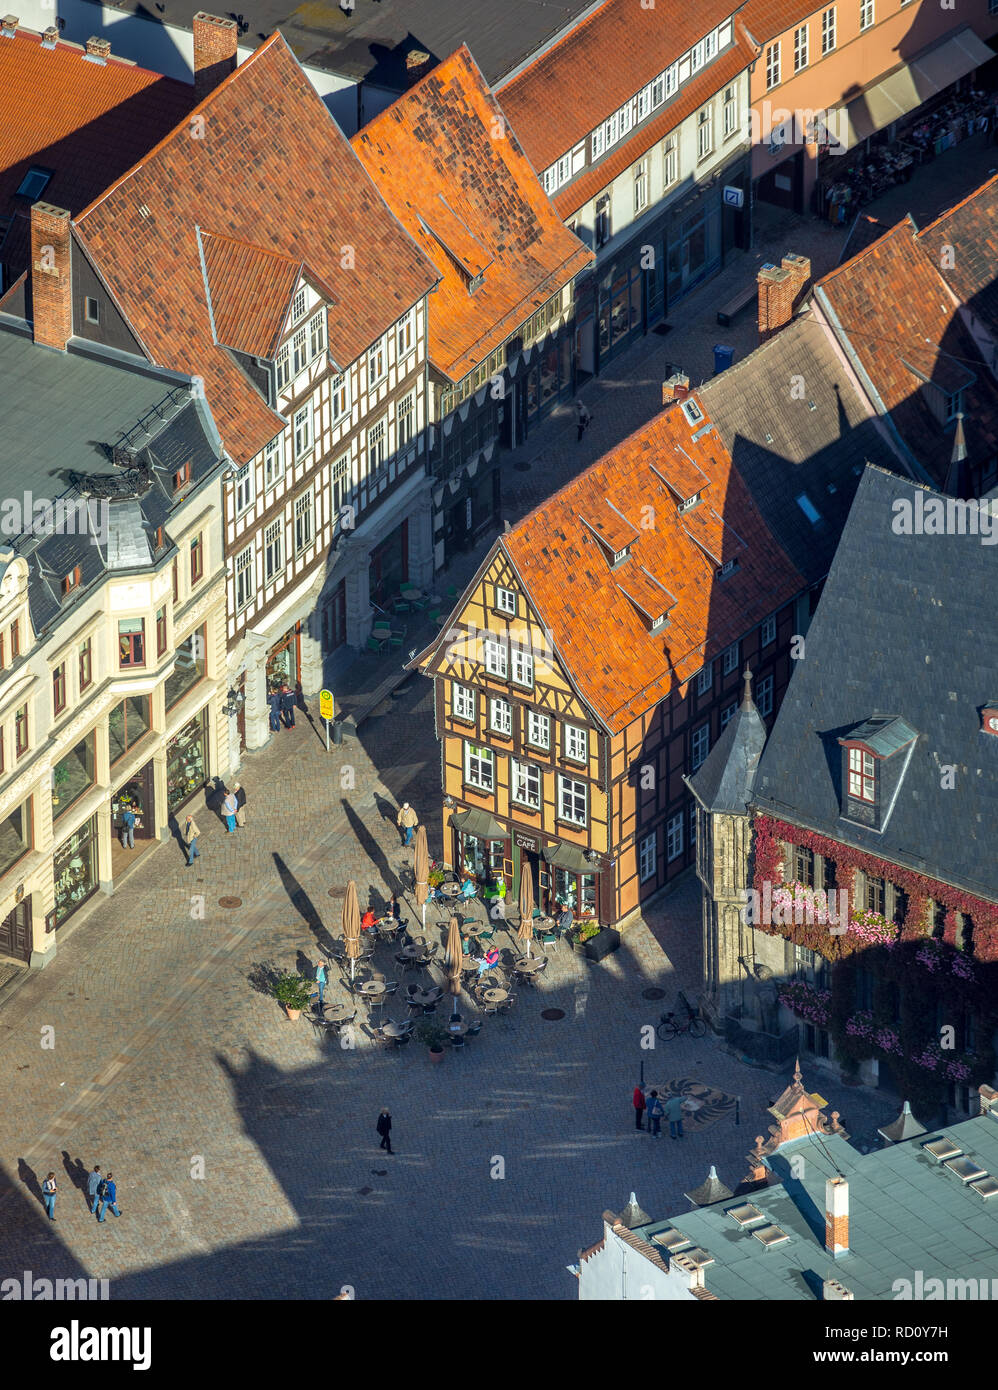 Vista aérea, Goetzsches Mausoleo, iglesia del mercado Stankt Benediktii, Marktkirchhof, Quedlinburg-Altstadt, Quedlinburg, distrito de Harz, en el Estado federado de Sajonia-Anhalt, Ge Foto de stock